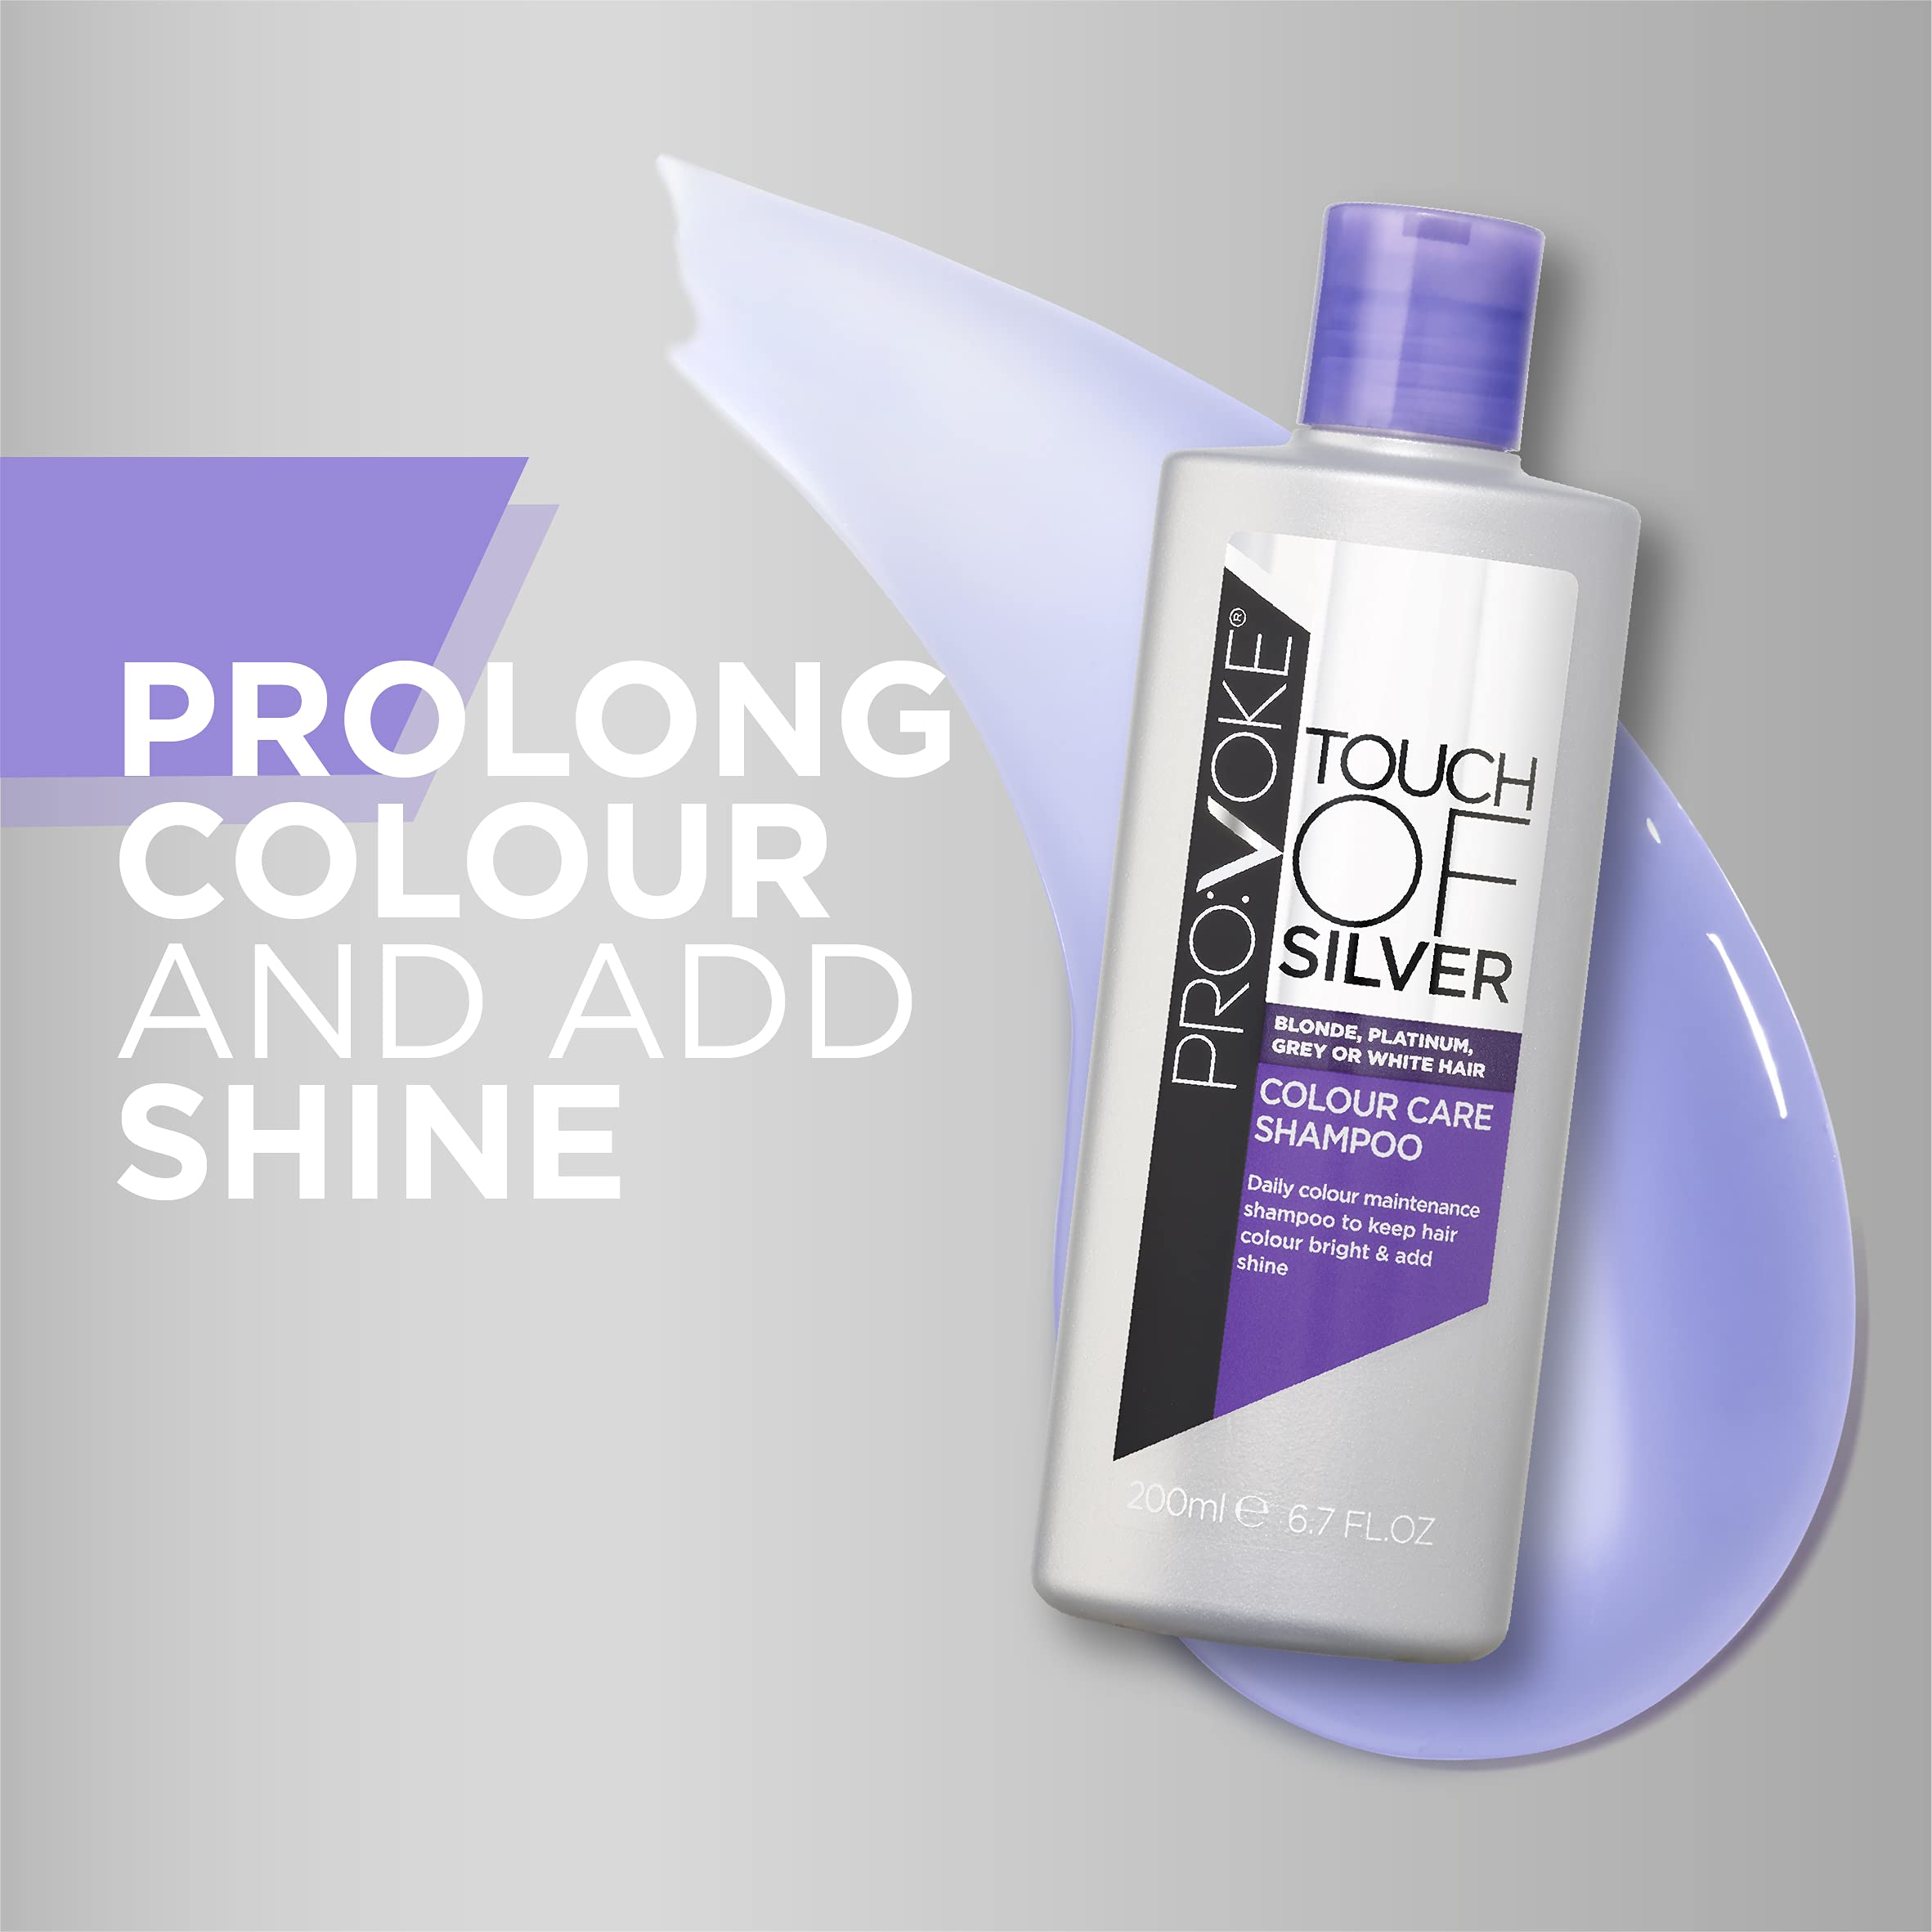 szampon serie touch of silver pro voke hair j